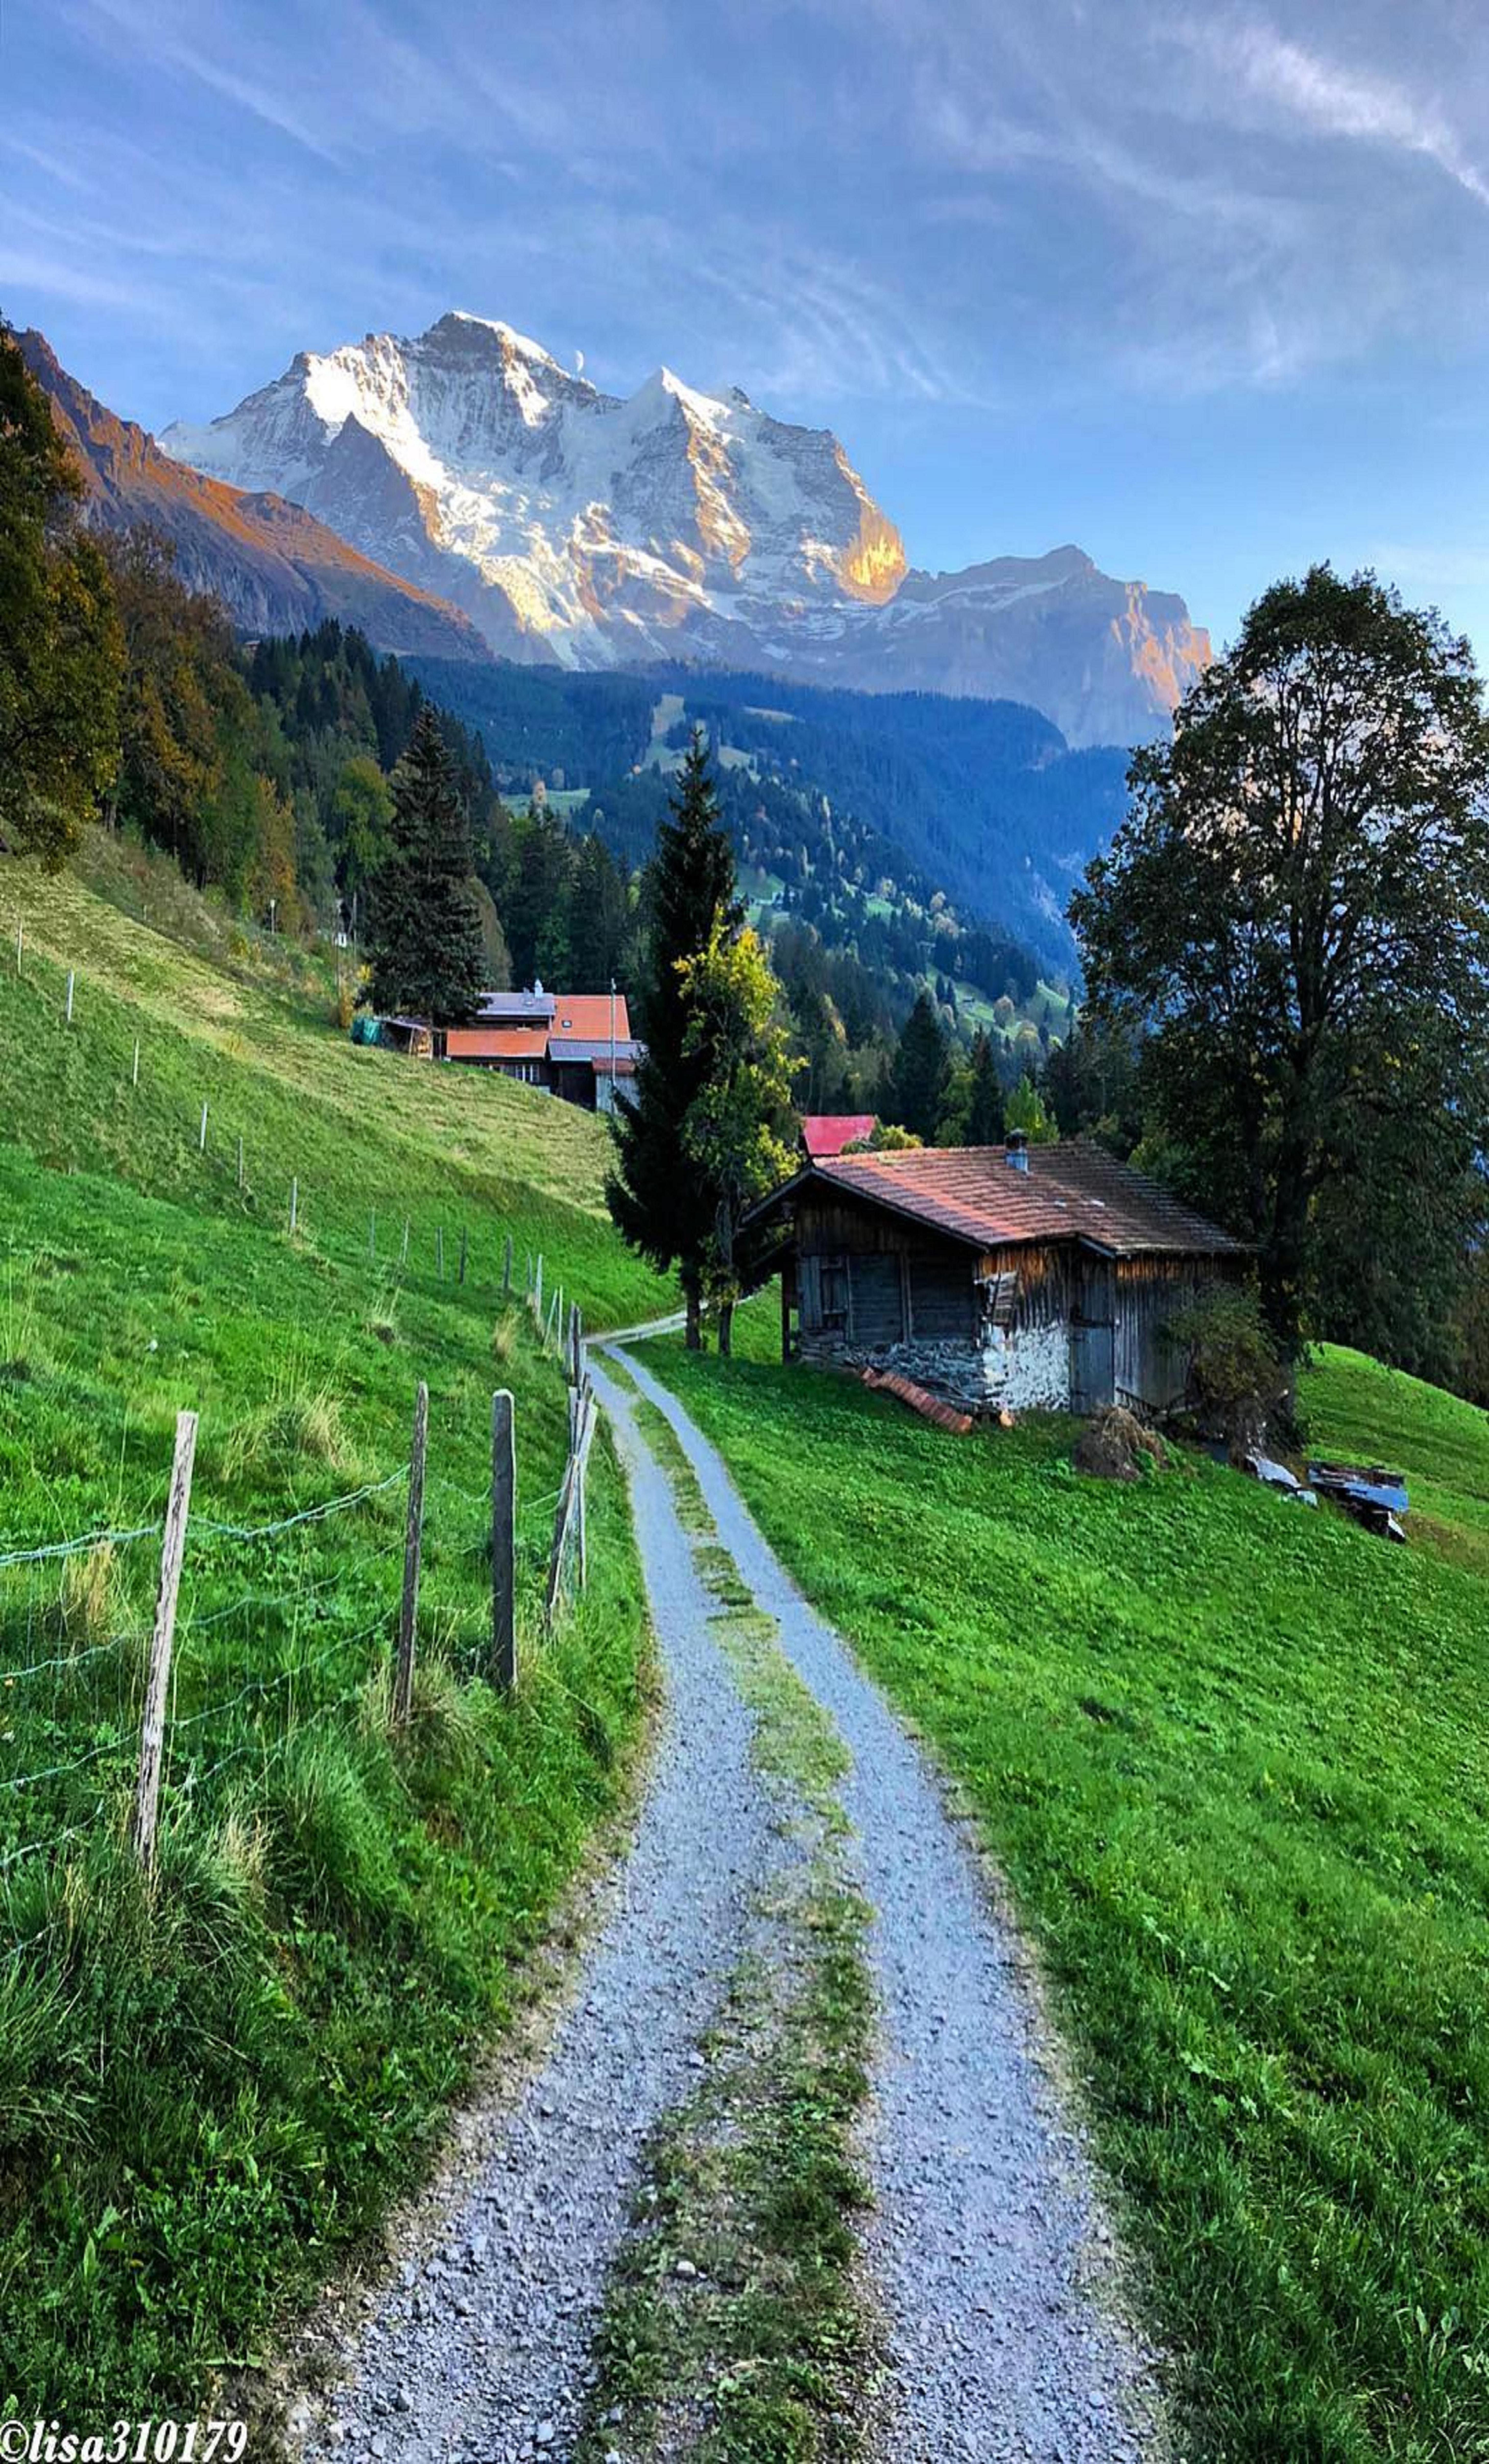 Switzerland. Beautiful nature, Nature picture, Beautiful places